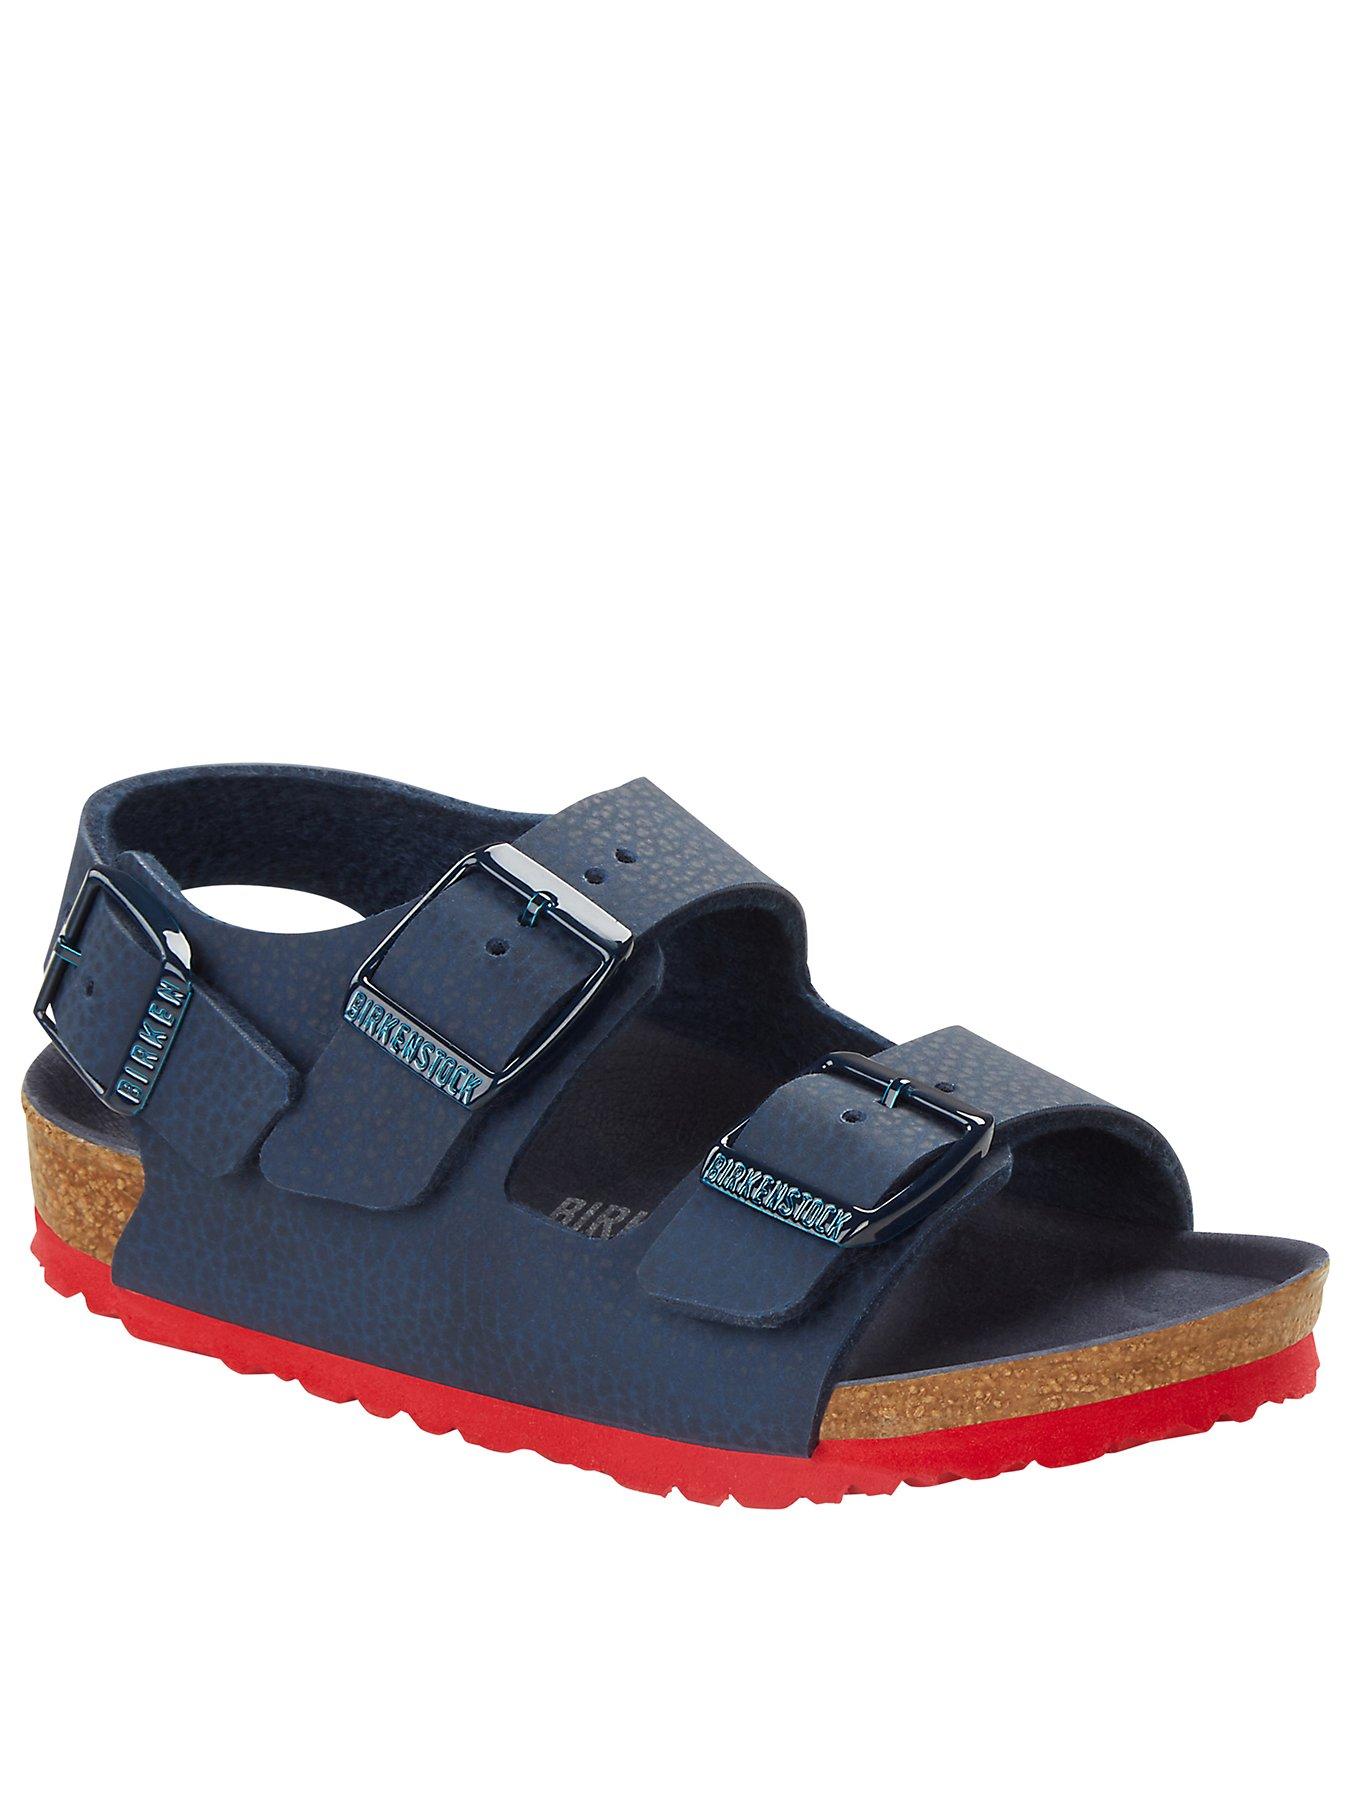 DREAM PAIRS Little Kid 160912-K Baby Blue Pink Outdoor Summer Sandals Size 1 US Little Kid/ 13 UK Child 